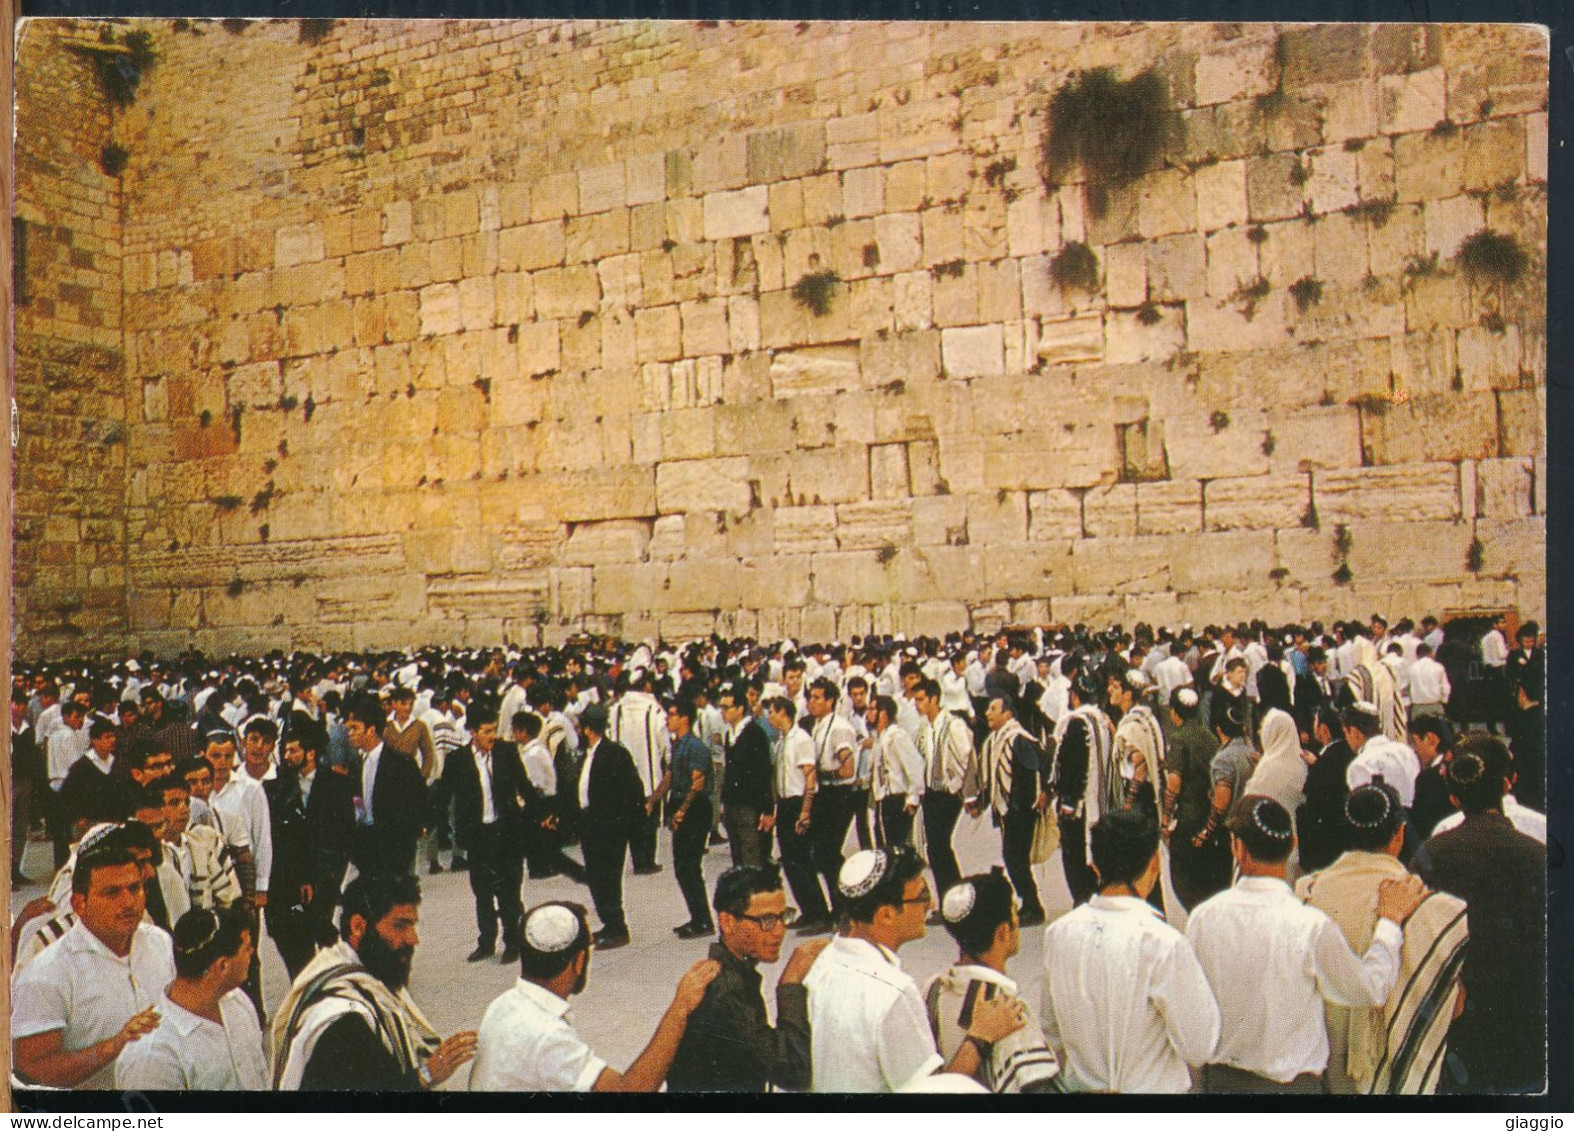 °°° 30885 - ISRAEL - LIBERATION DAY OF JERUSALEM CONGREGATION AT THE WAILING WALL °°° - Israel